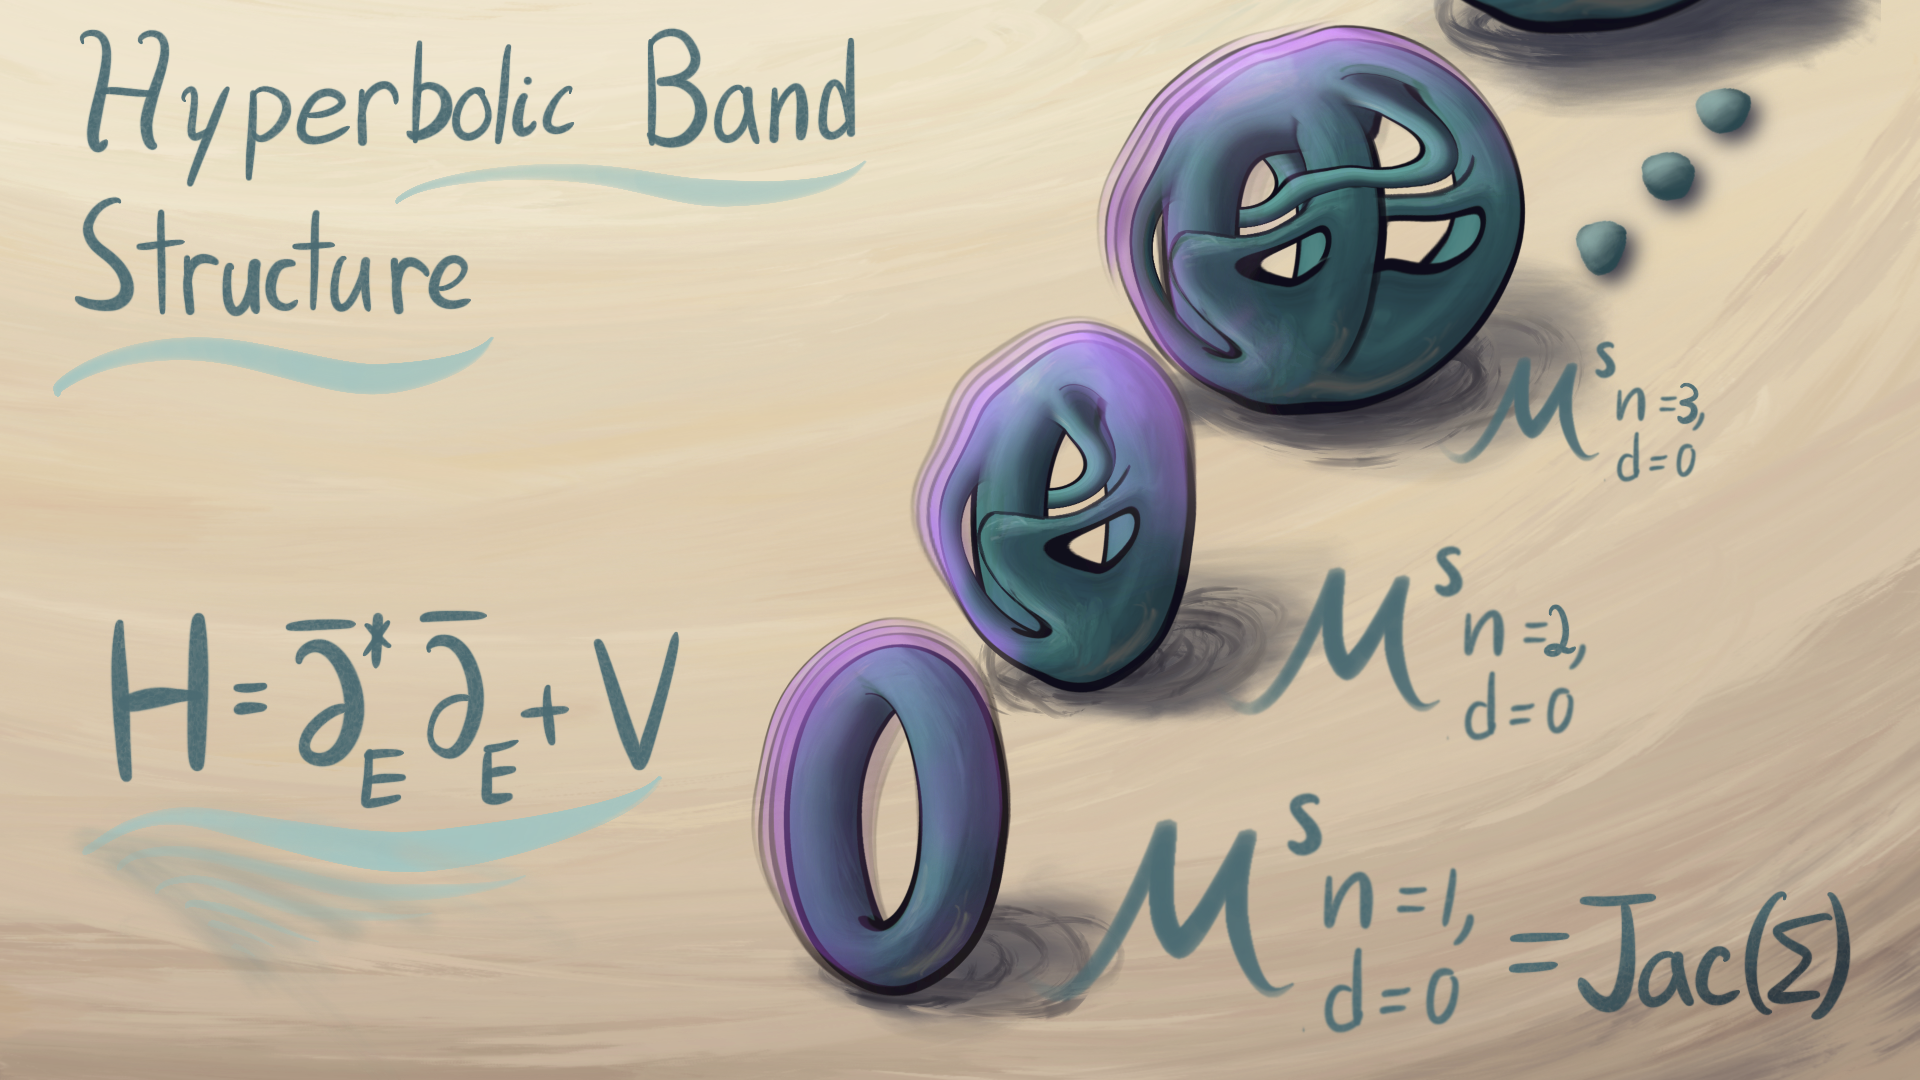 Hyperbolic Band theory